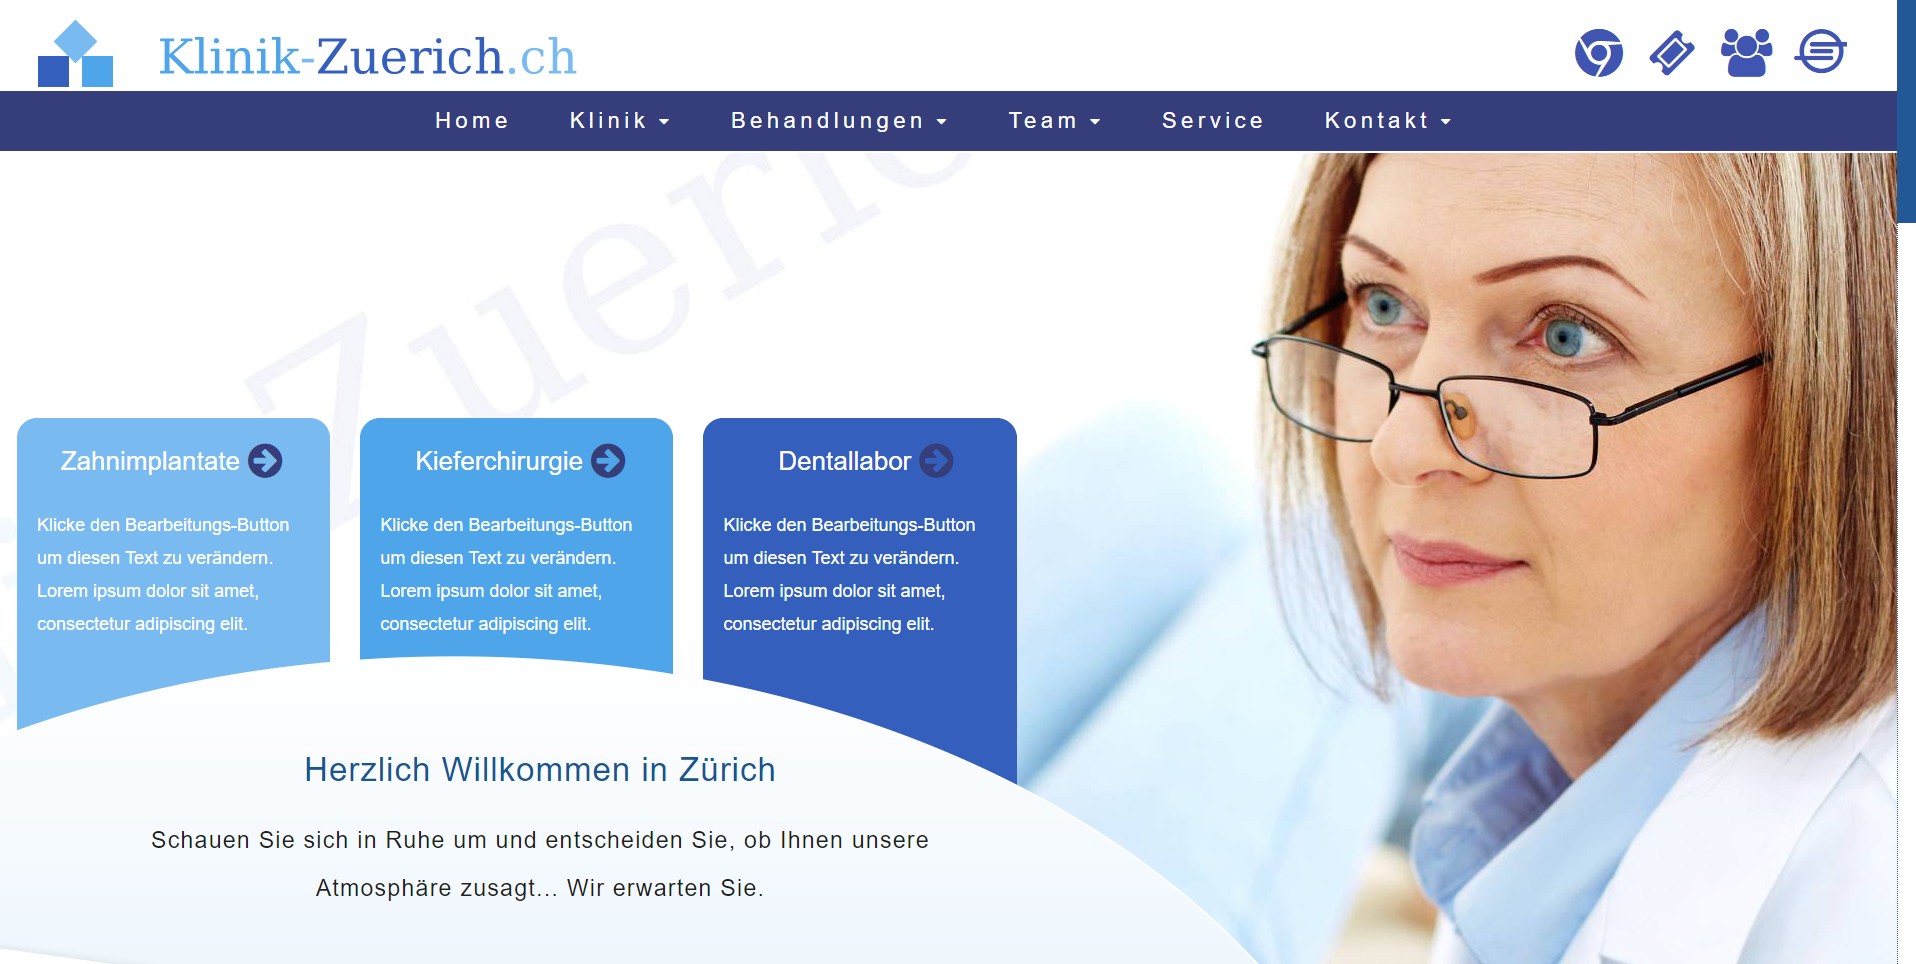 Klinik-Zuerich.ch